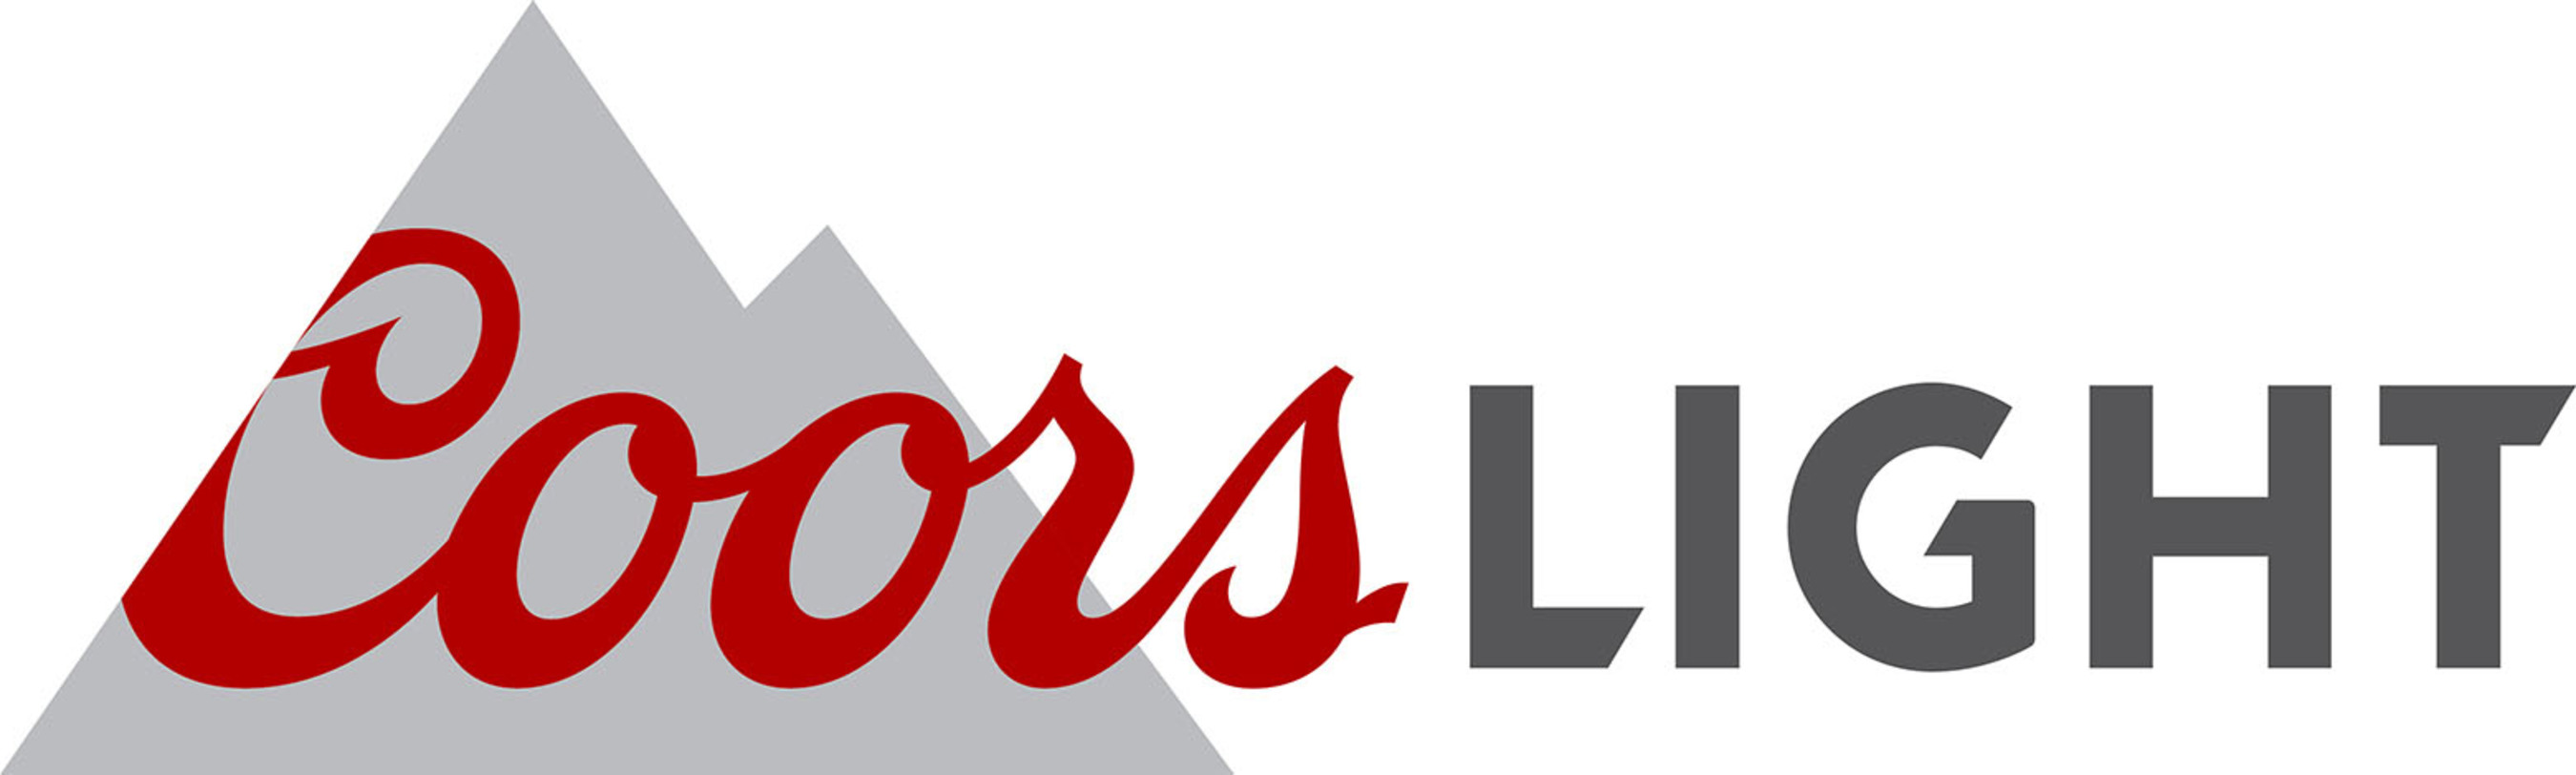 Coors Light logo. (PRNewsFoto/MillerCoors) (PRNewsFoto/)